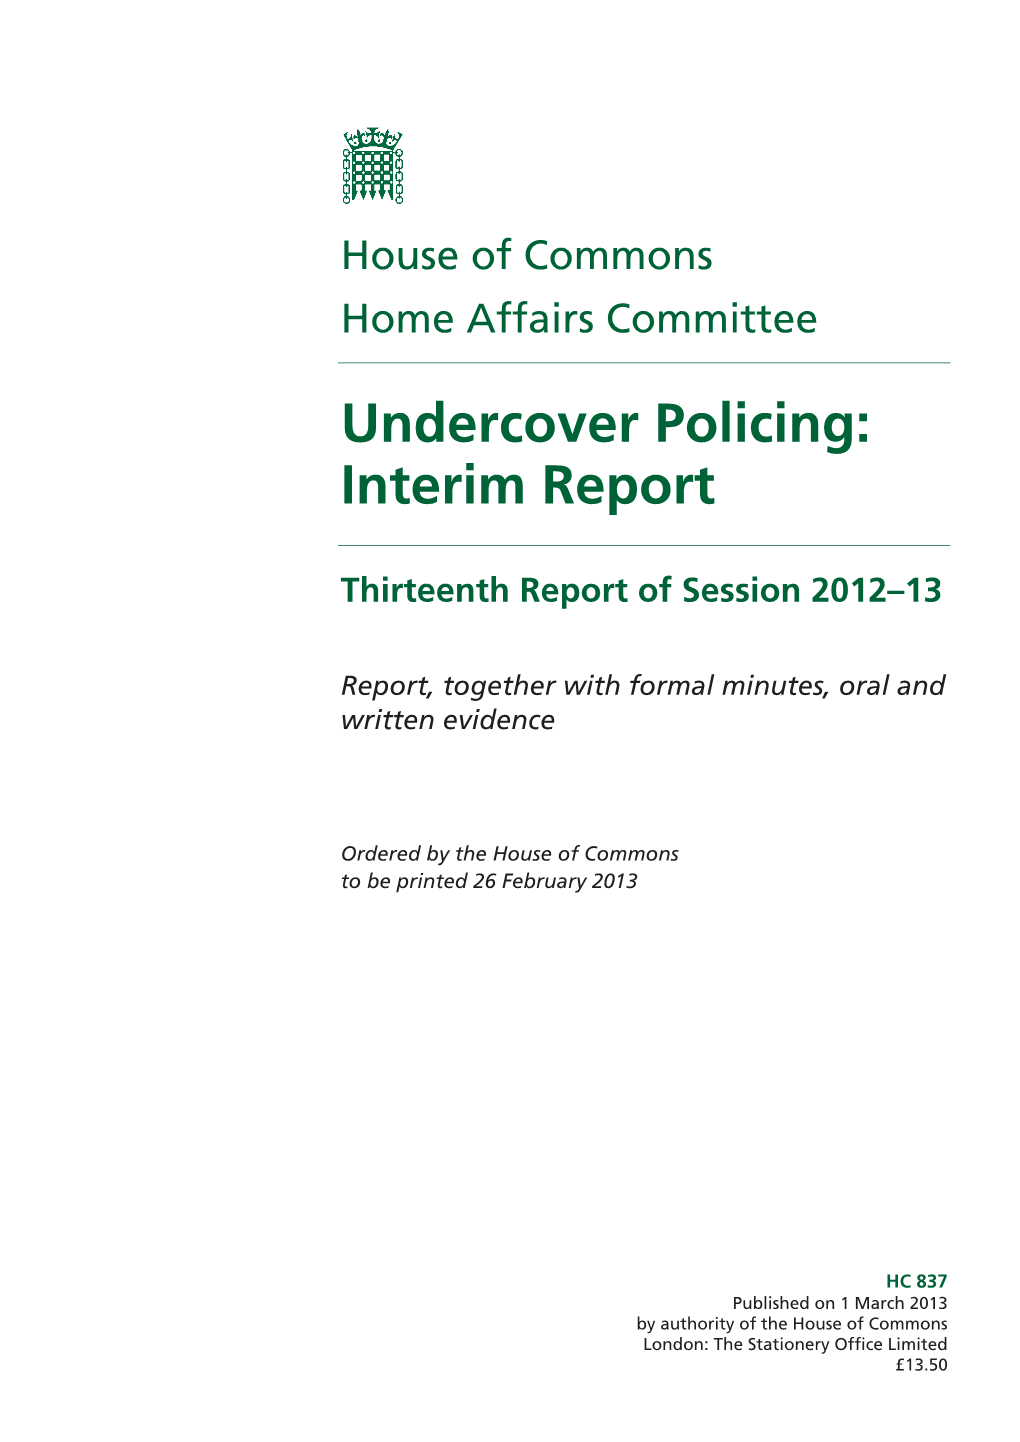 Undercover Policing: Interim Report